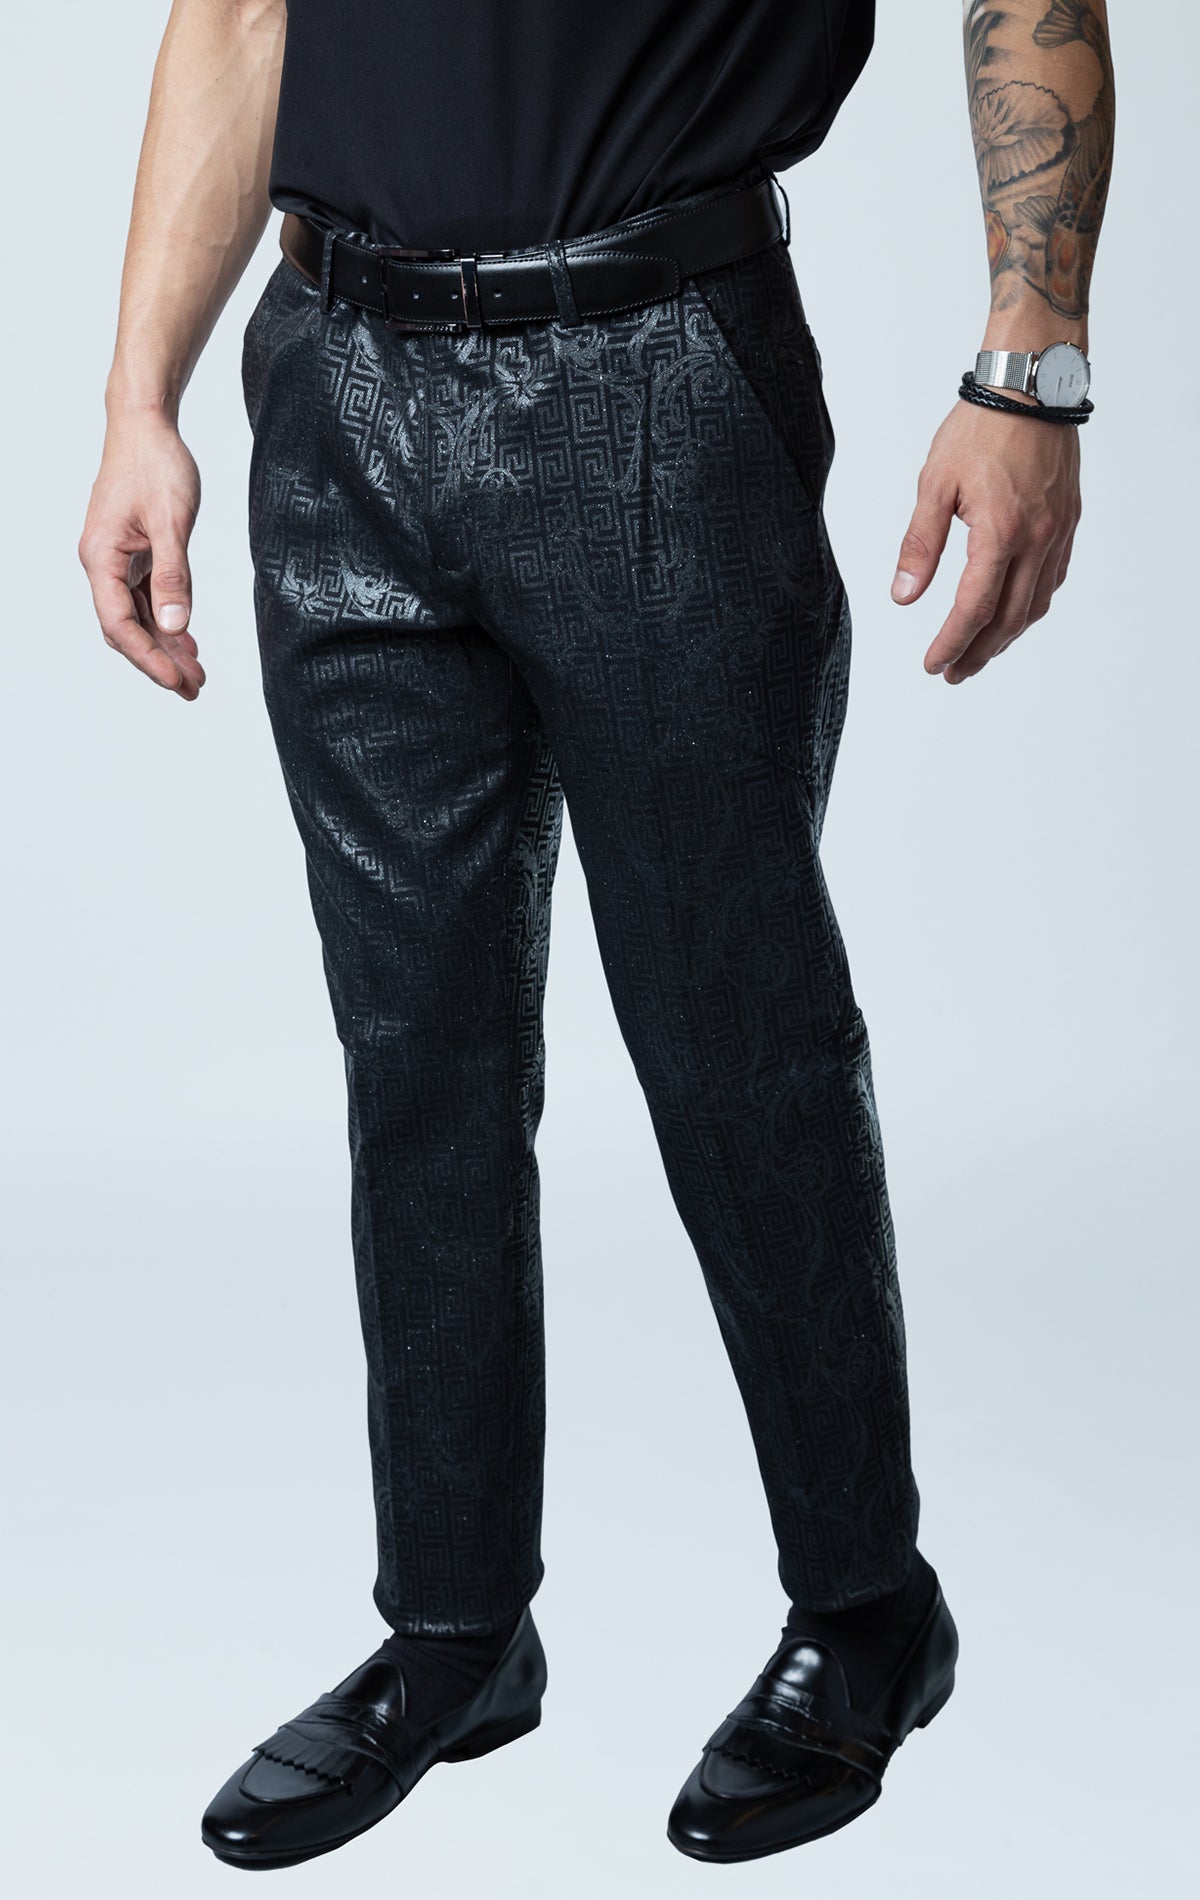 Black greek key pattern designer pants